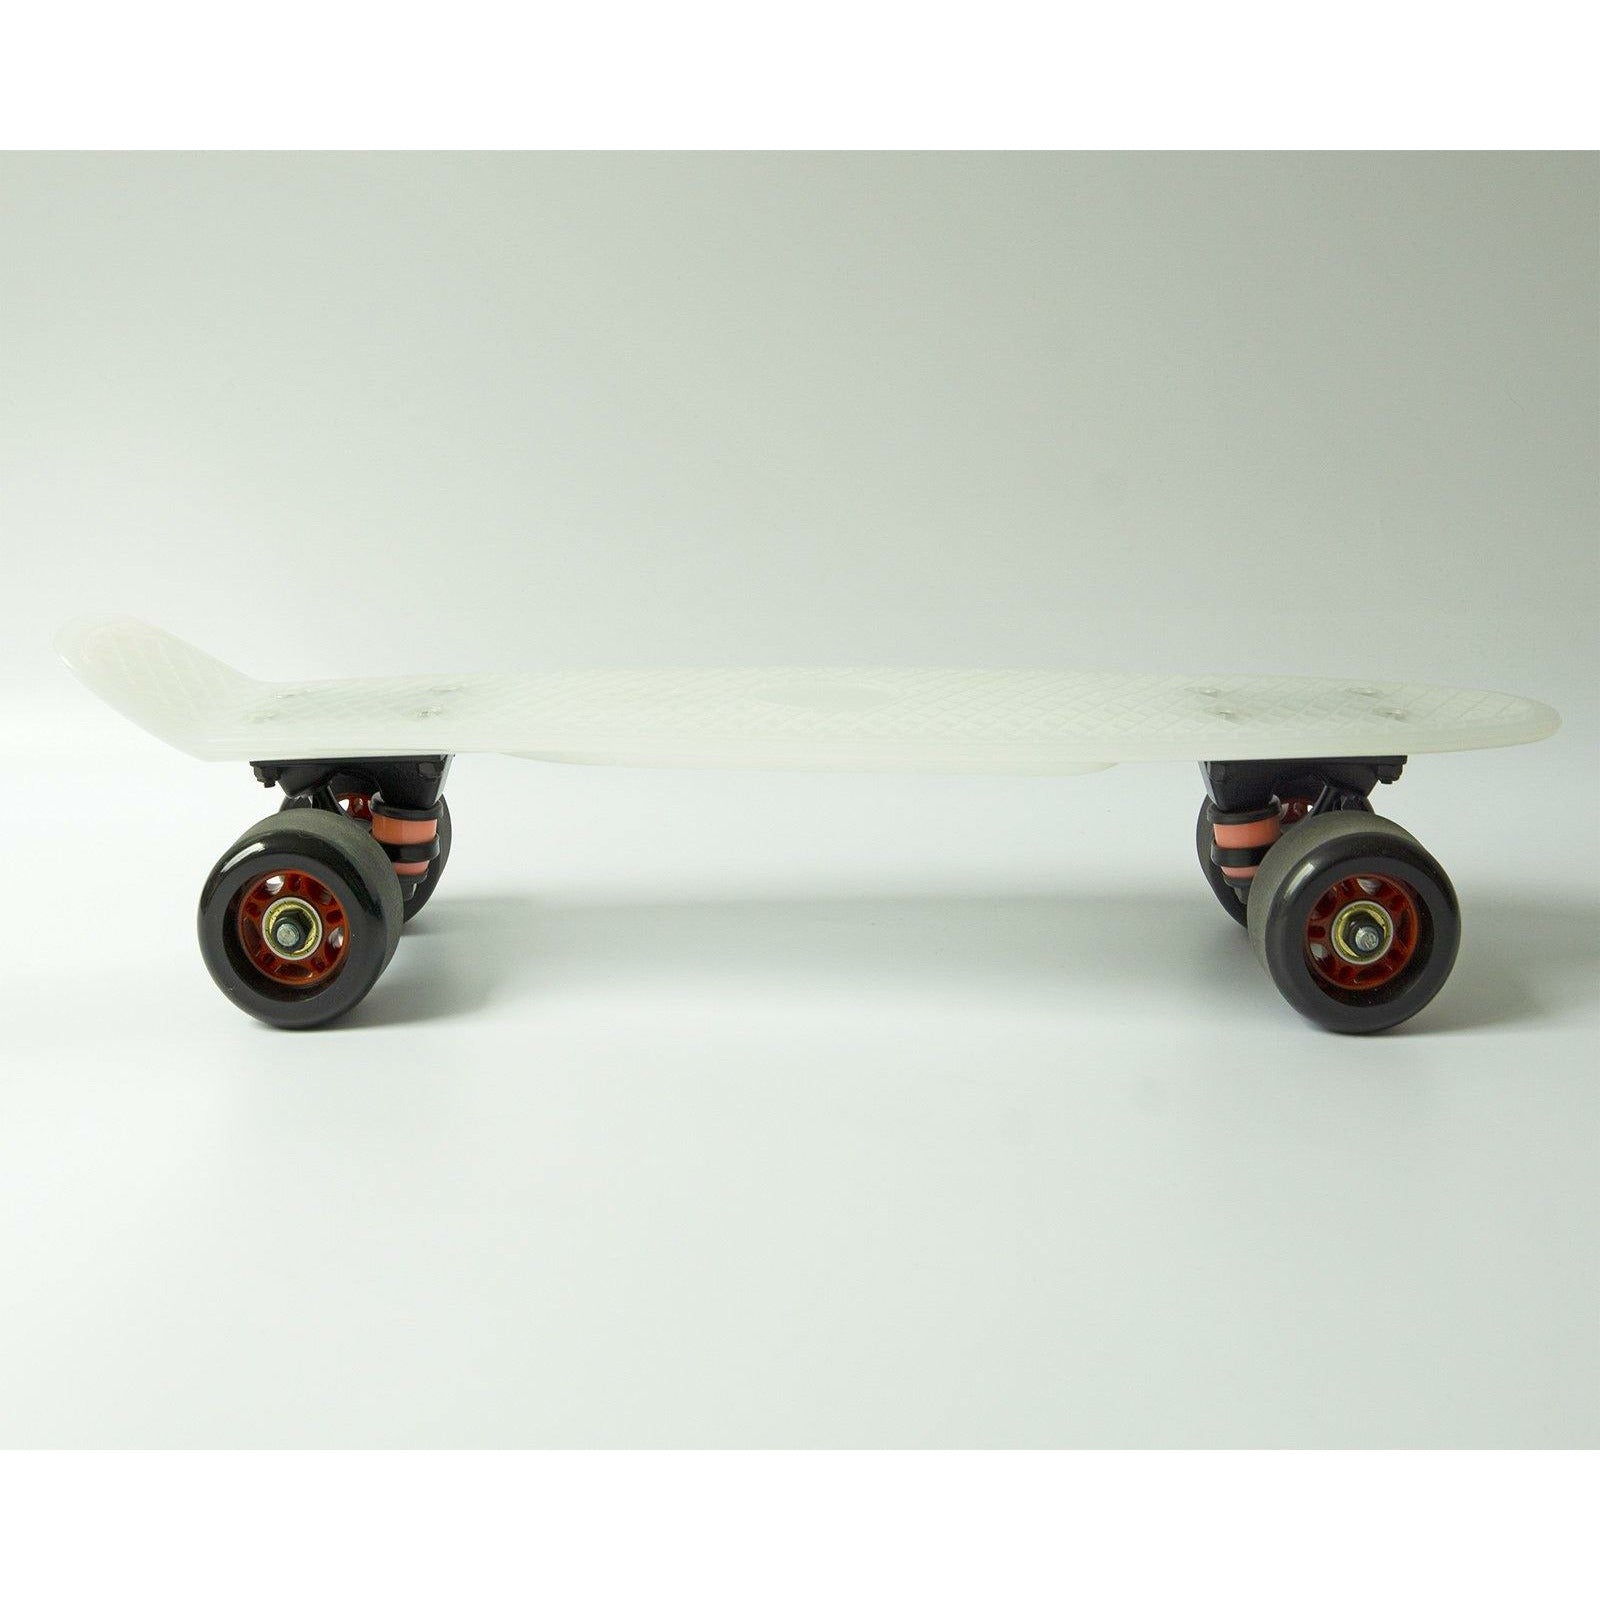 Retro Cruiser Skateboards  - White deck with black wheels - IVYPHANT